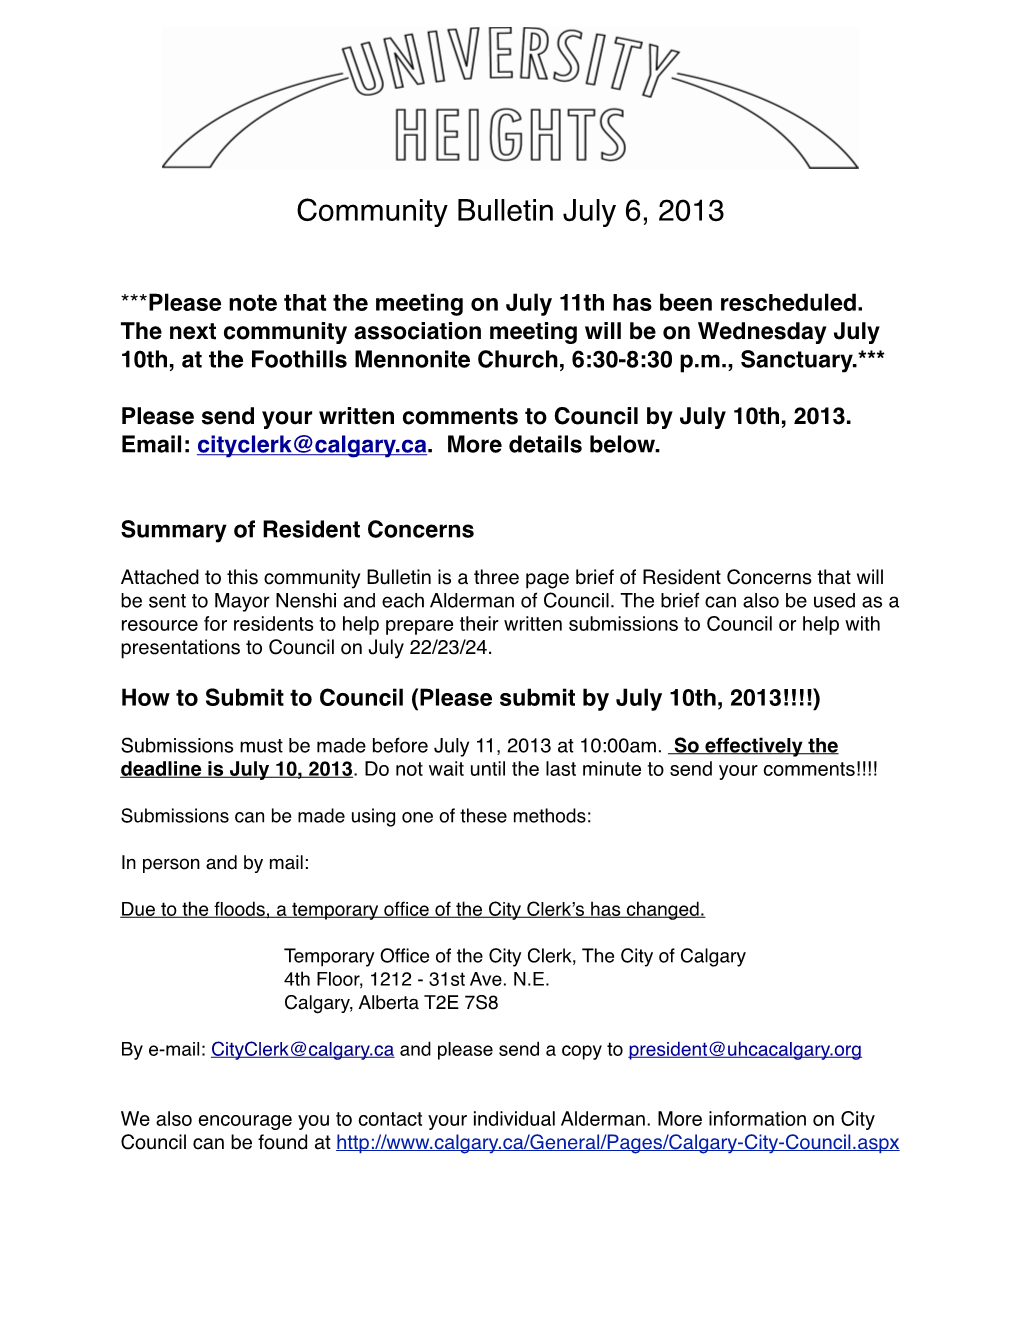 Community Belletin, July 6, 2013